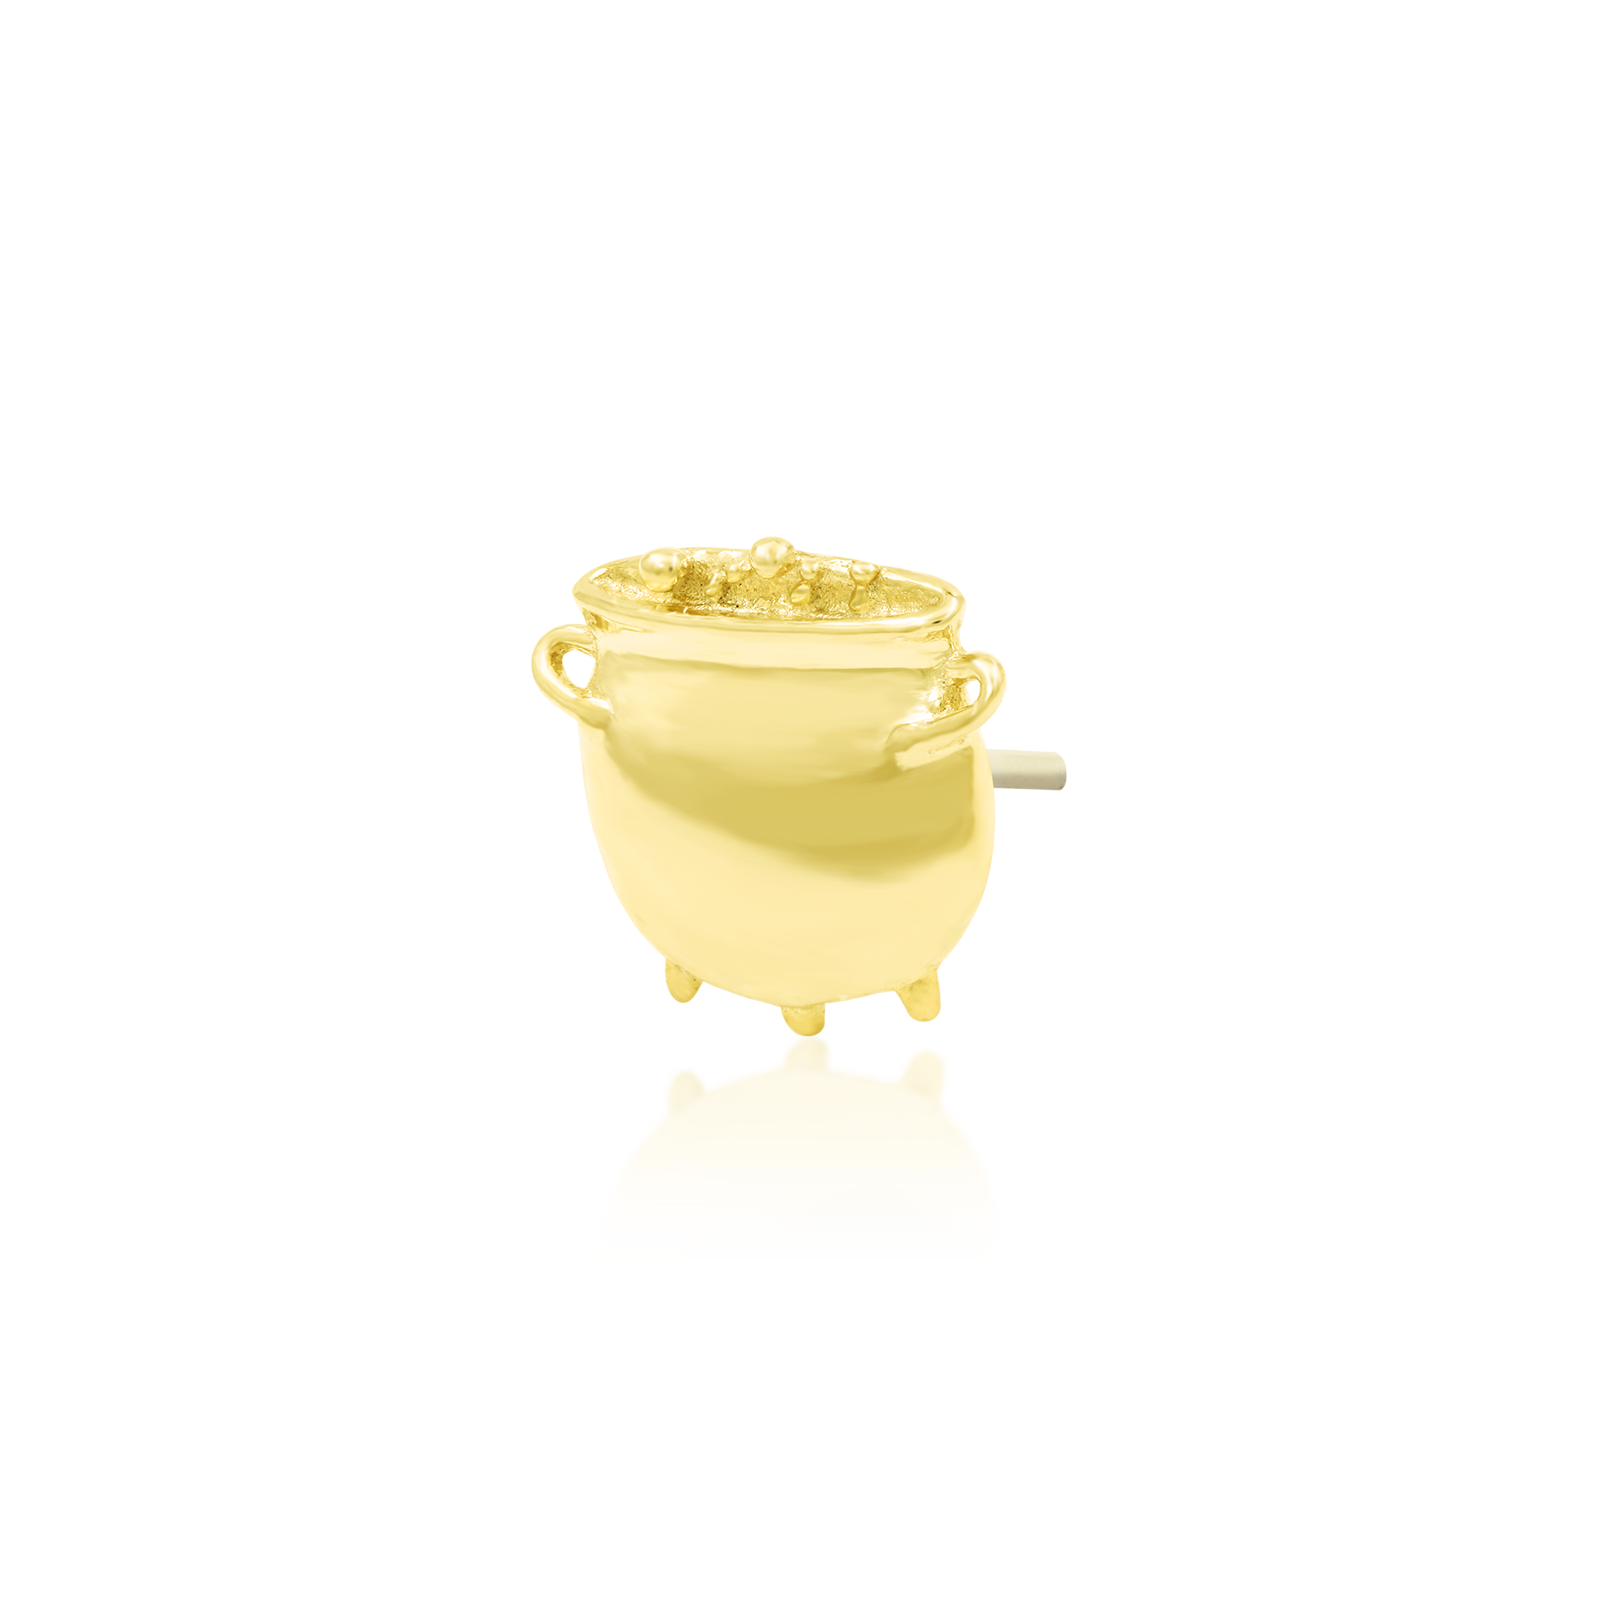 Cauldron in 14k Gold by Junipurr